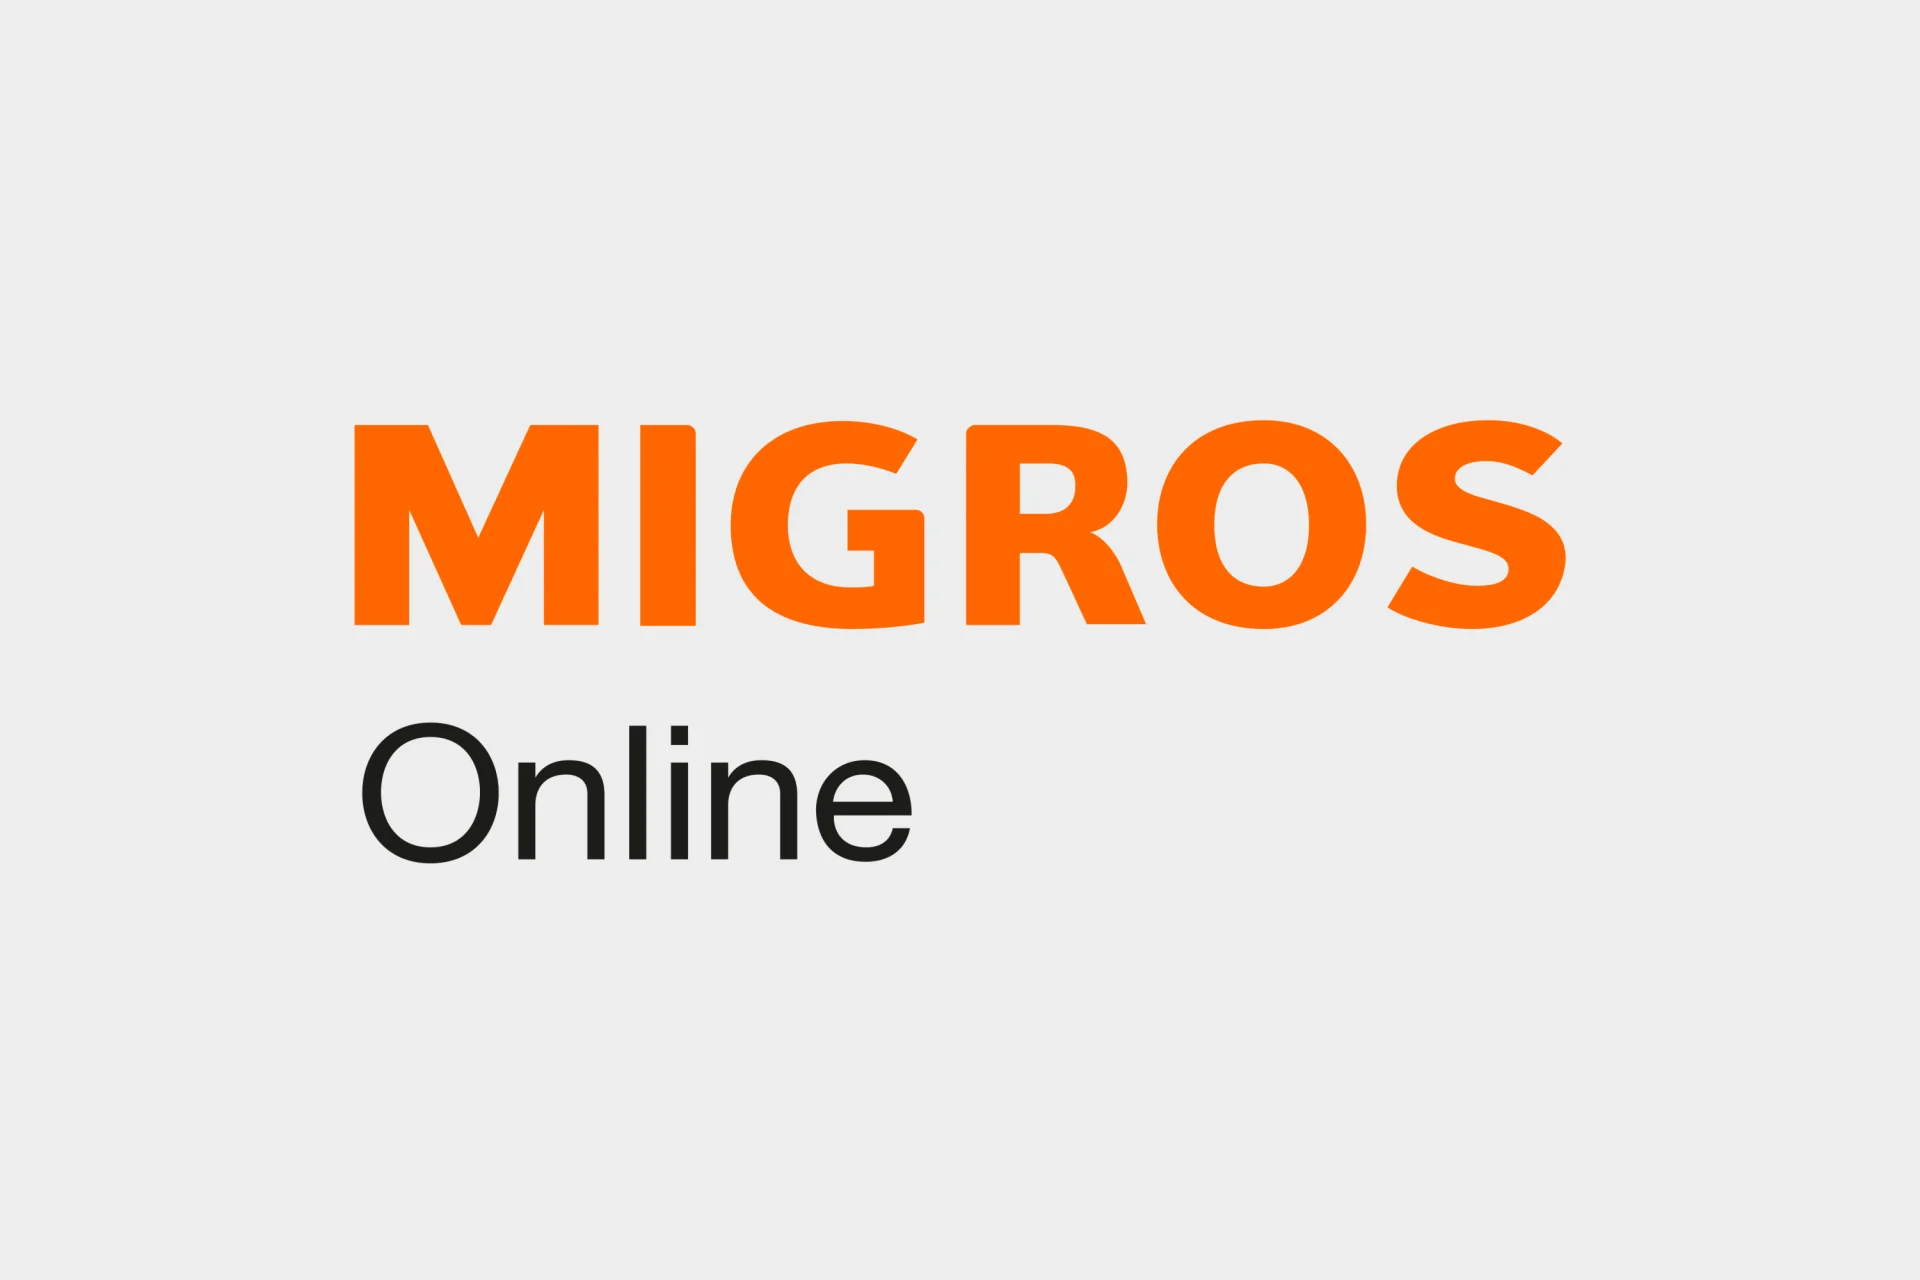 Migros Online Logo